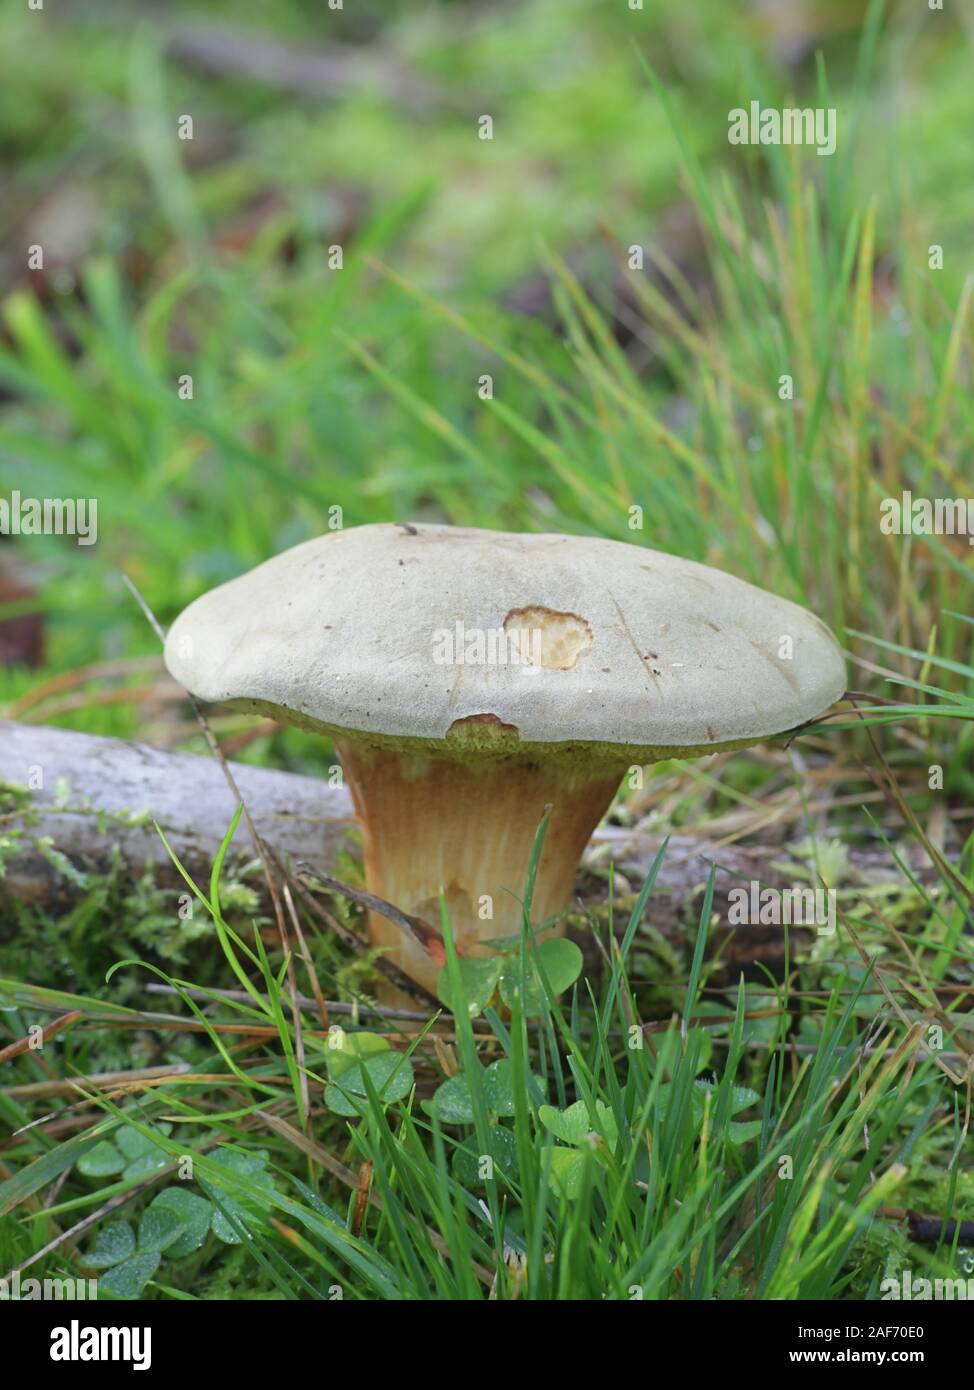 Xerocomus subtomentosus, known as suede bolete, brown and yellow bolet, boring brown bolete or yellow-cracked bolete, wild edible mushrooms from Finla Stock Photo